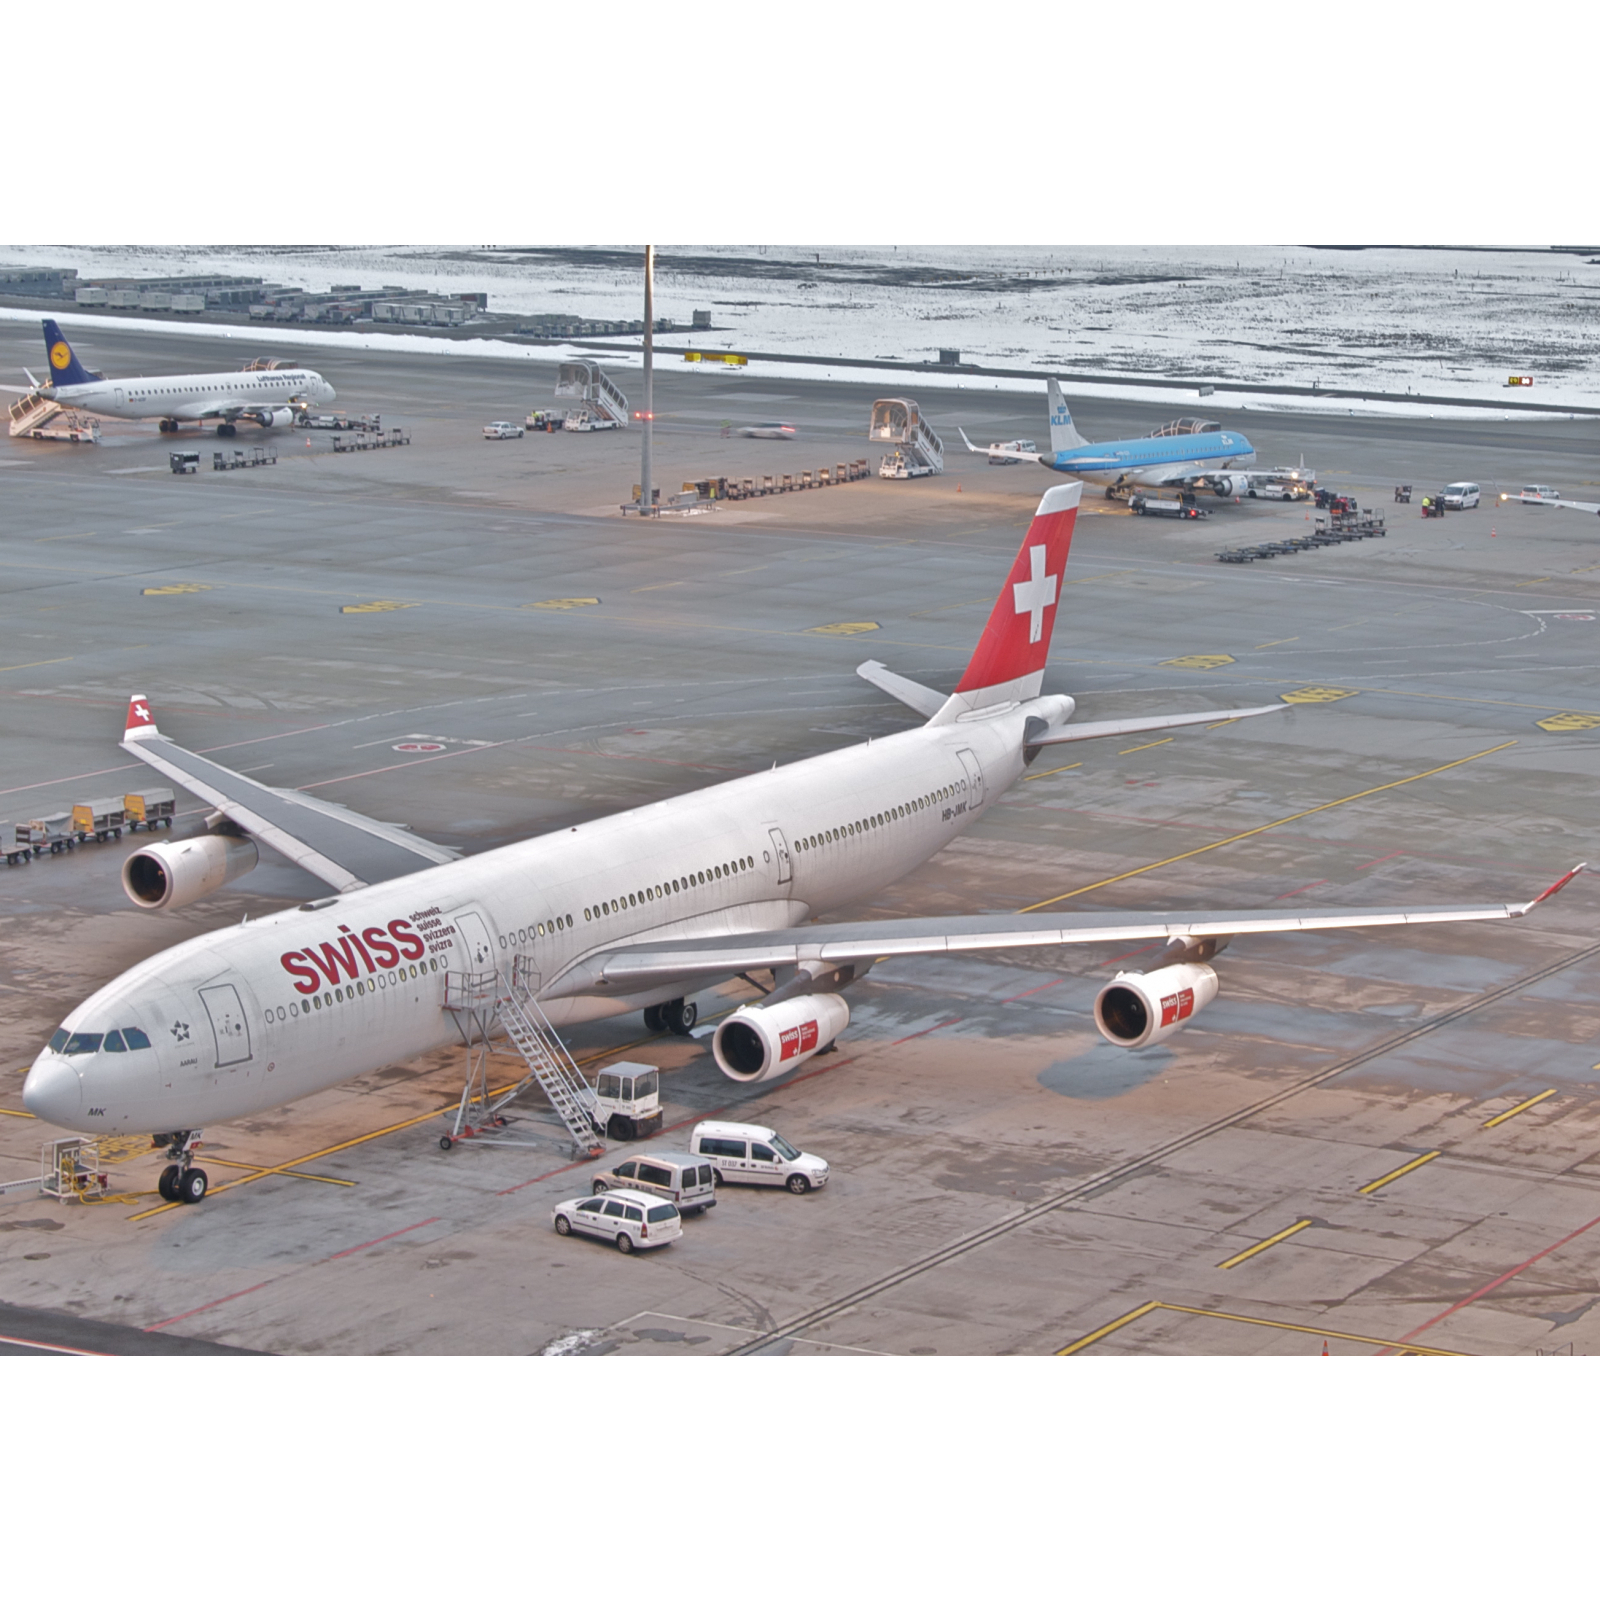 Aviationtag Swiss - Airbus A340 - HB-JMK